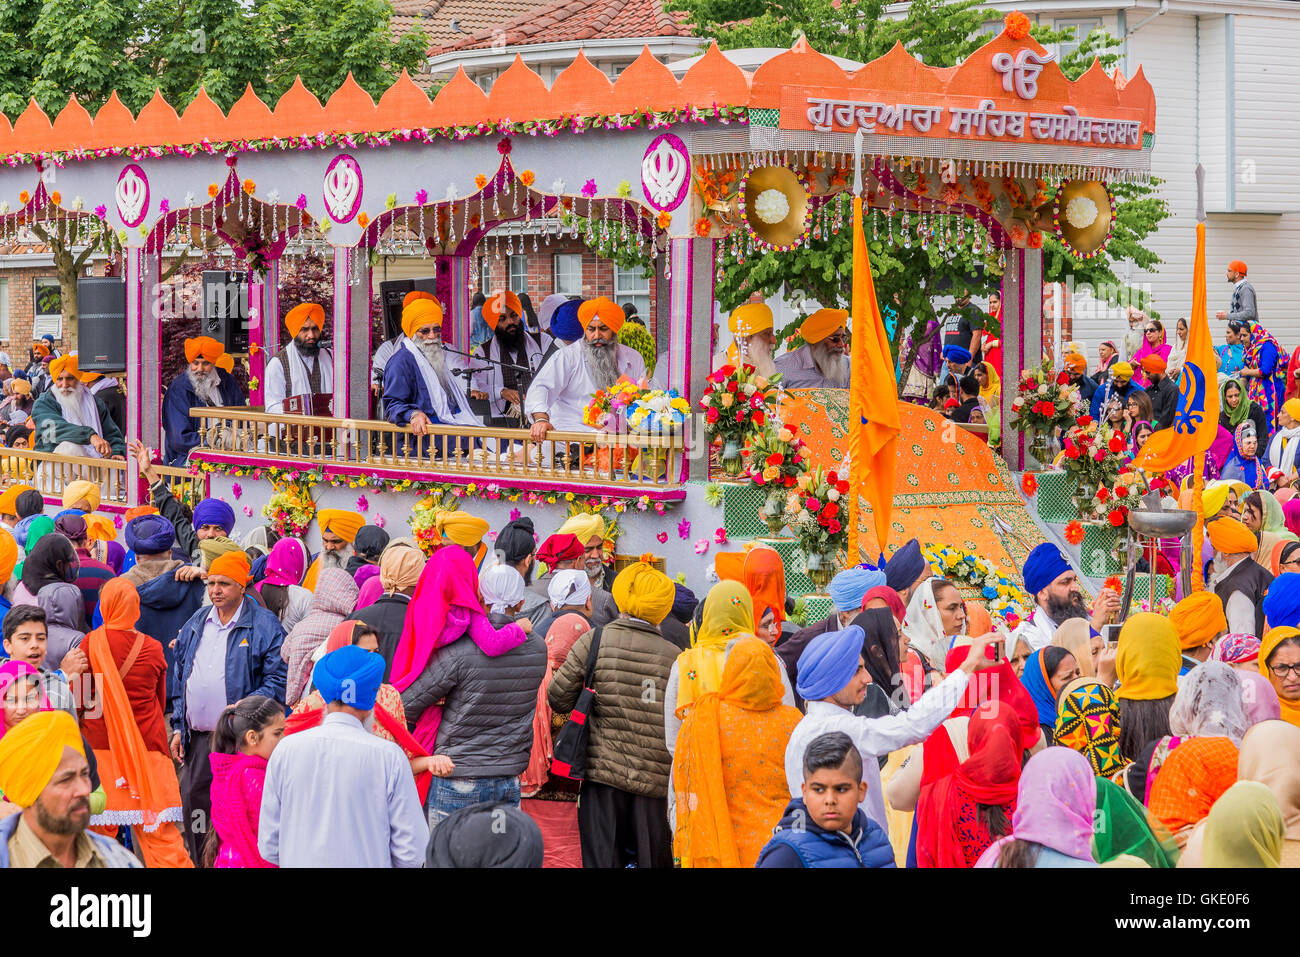 Sfilata galleggiante portante la sacra Scrittura, il Guru Granth Sahib, xi guru dei sikh. Vaisakhi Parade, Surrey, BC Foto Stock